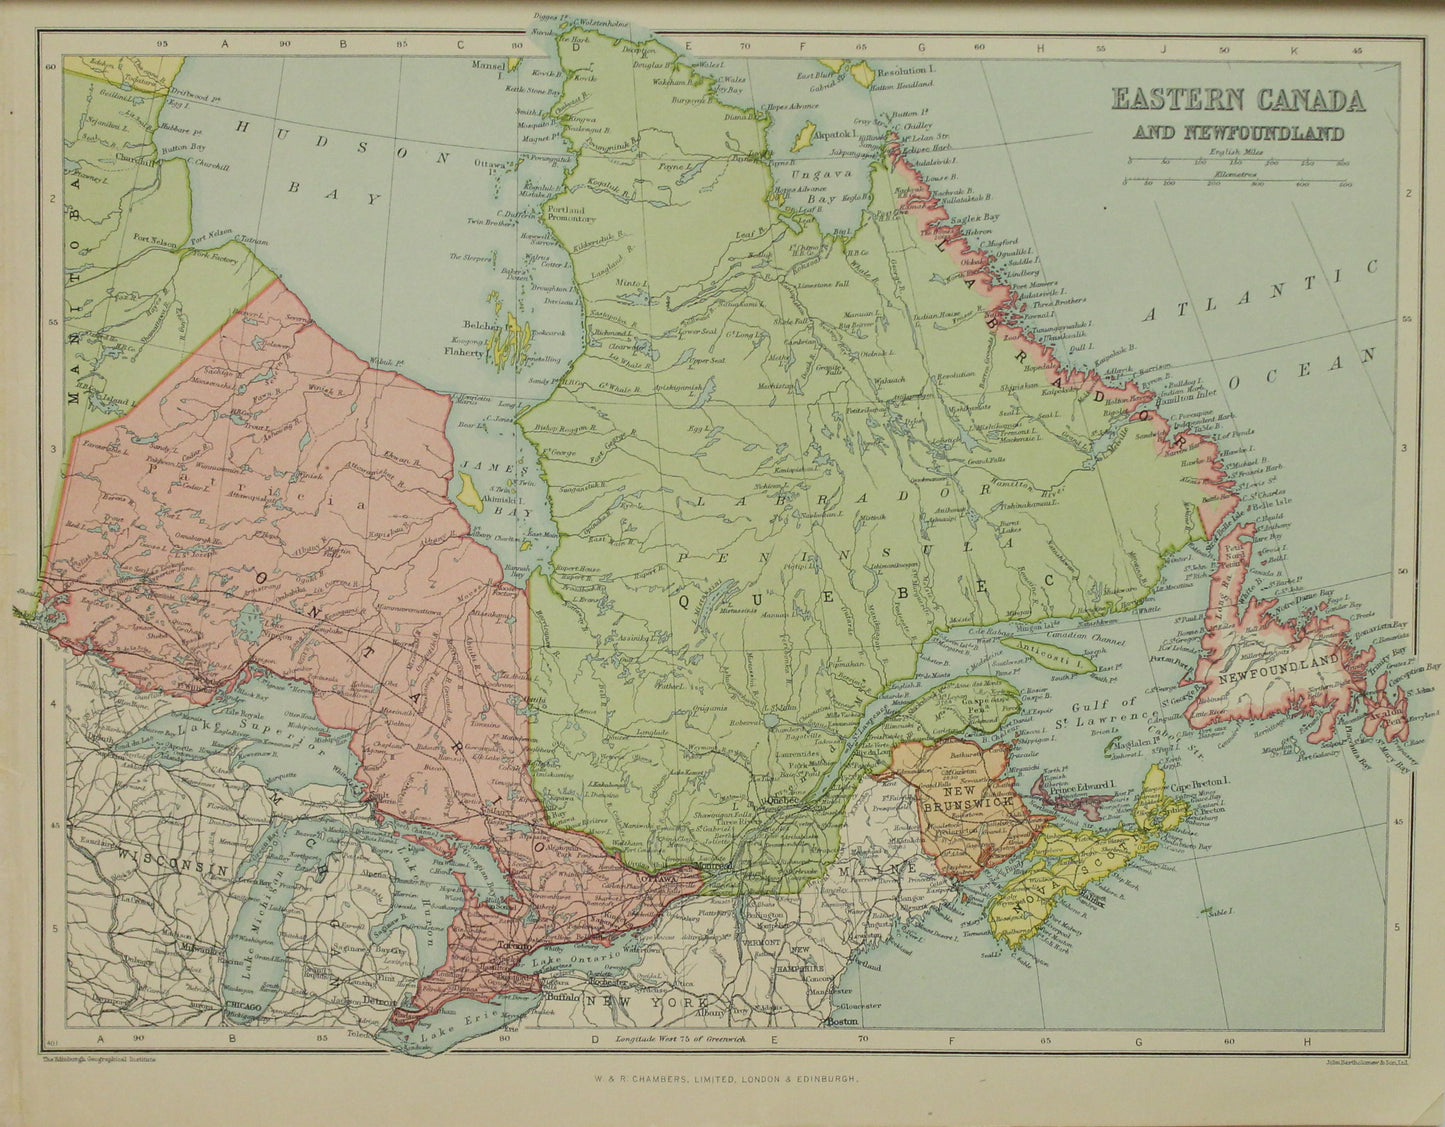 Map, Eastern Canada and Newfoundland, The Edinburgh Geographical Institute, John Bartholomew and Sons Ltd,  W & R Chambers,